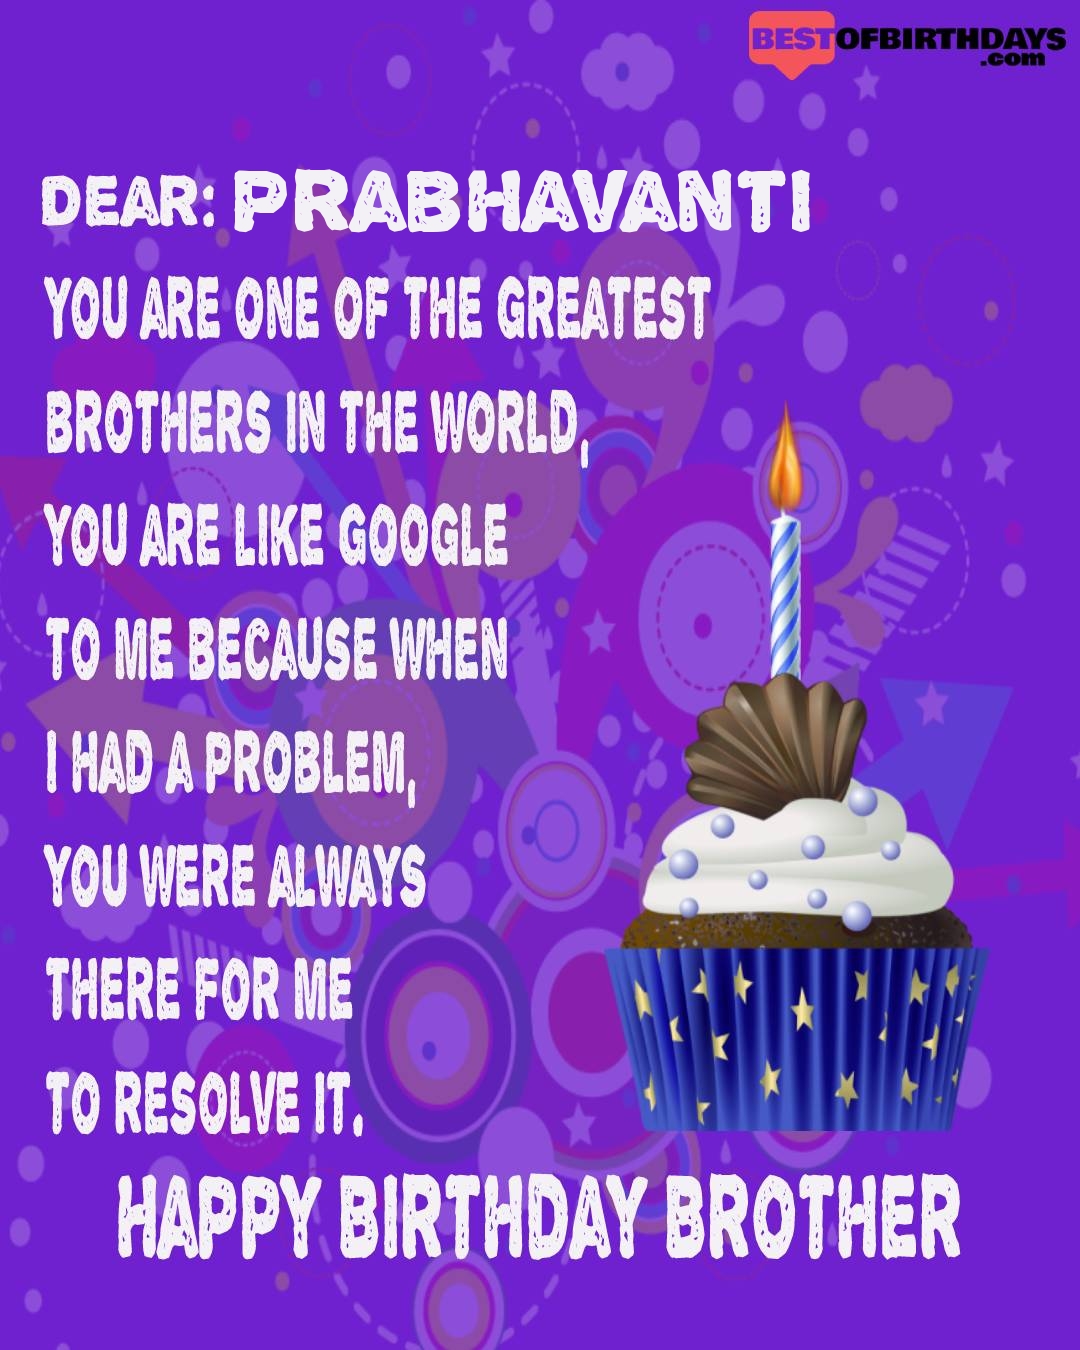 Happy birthday prabhavanti bhai brother bro